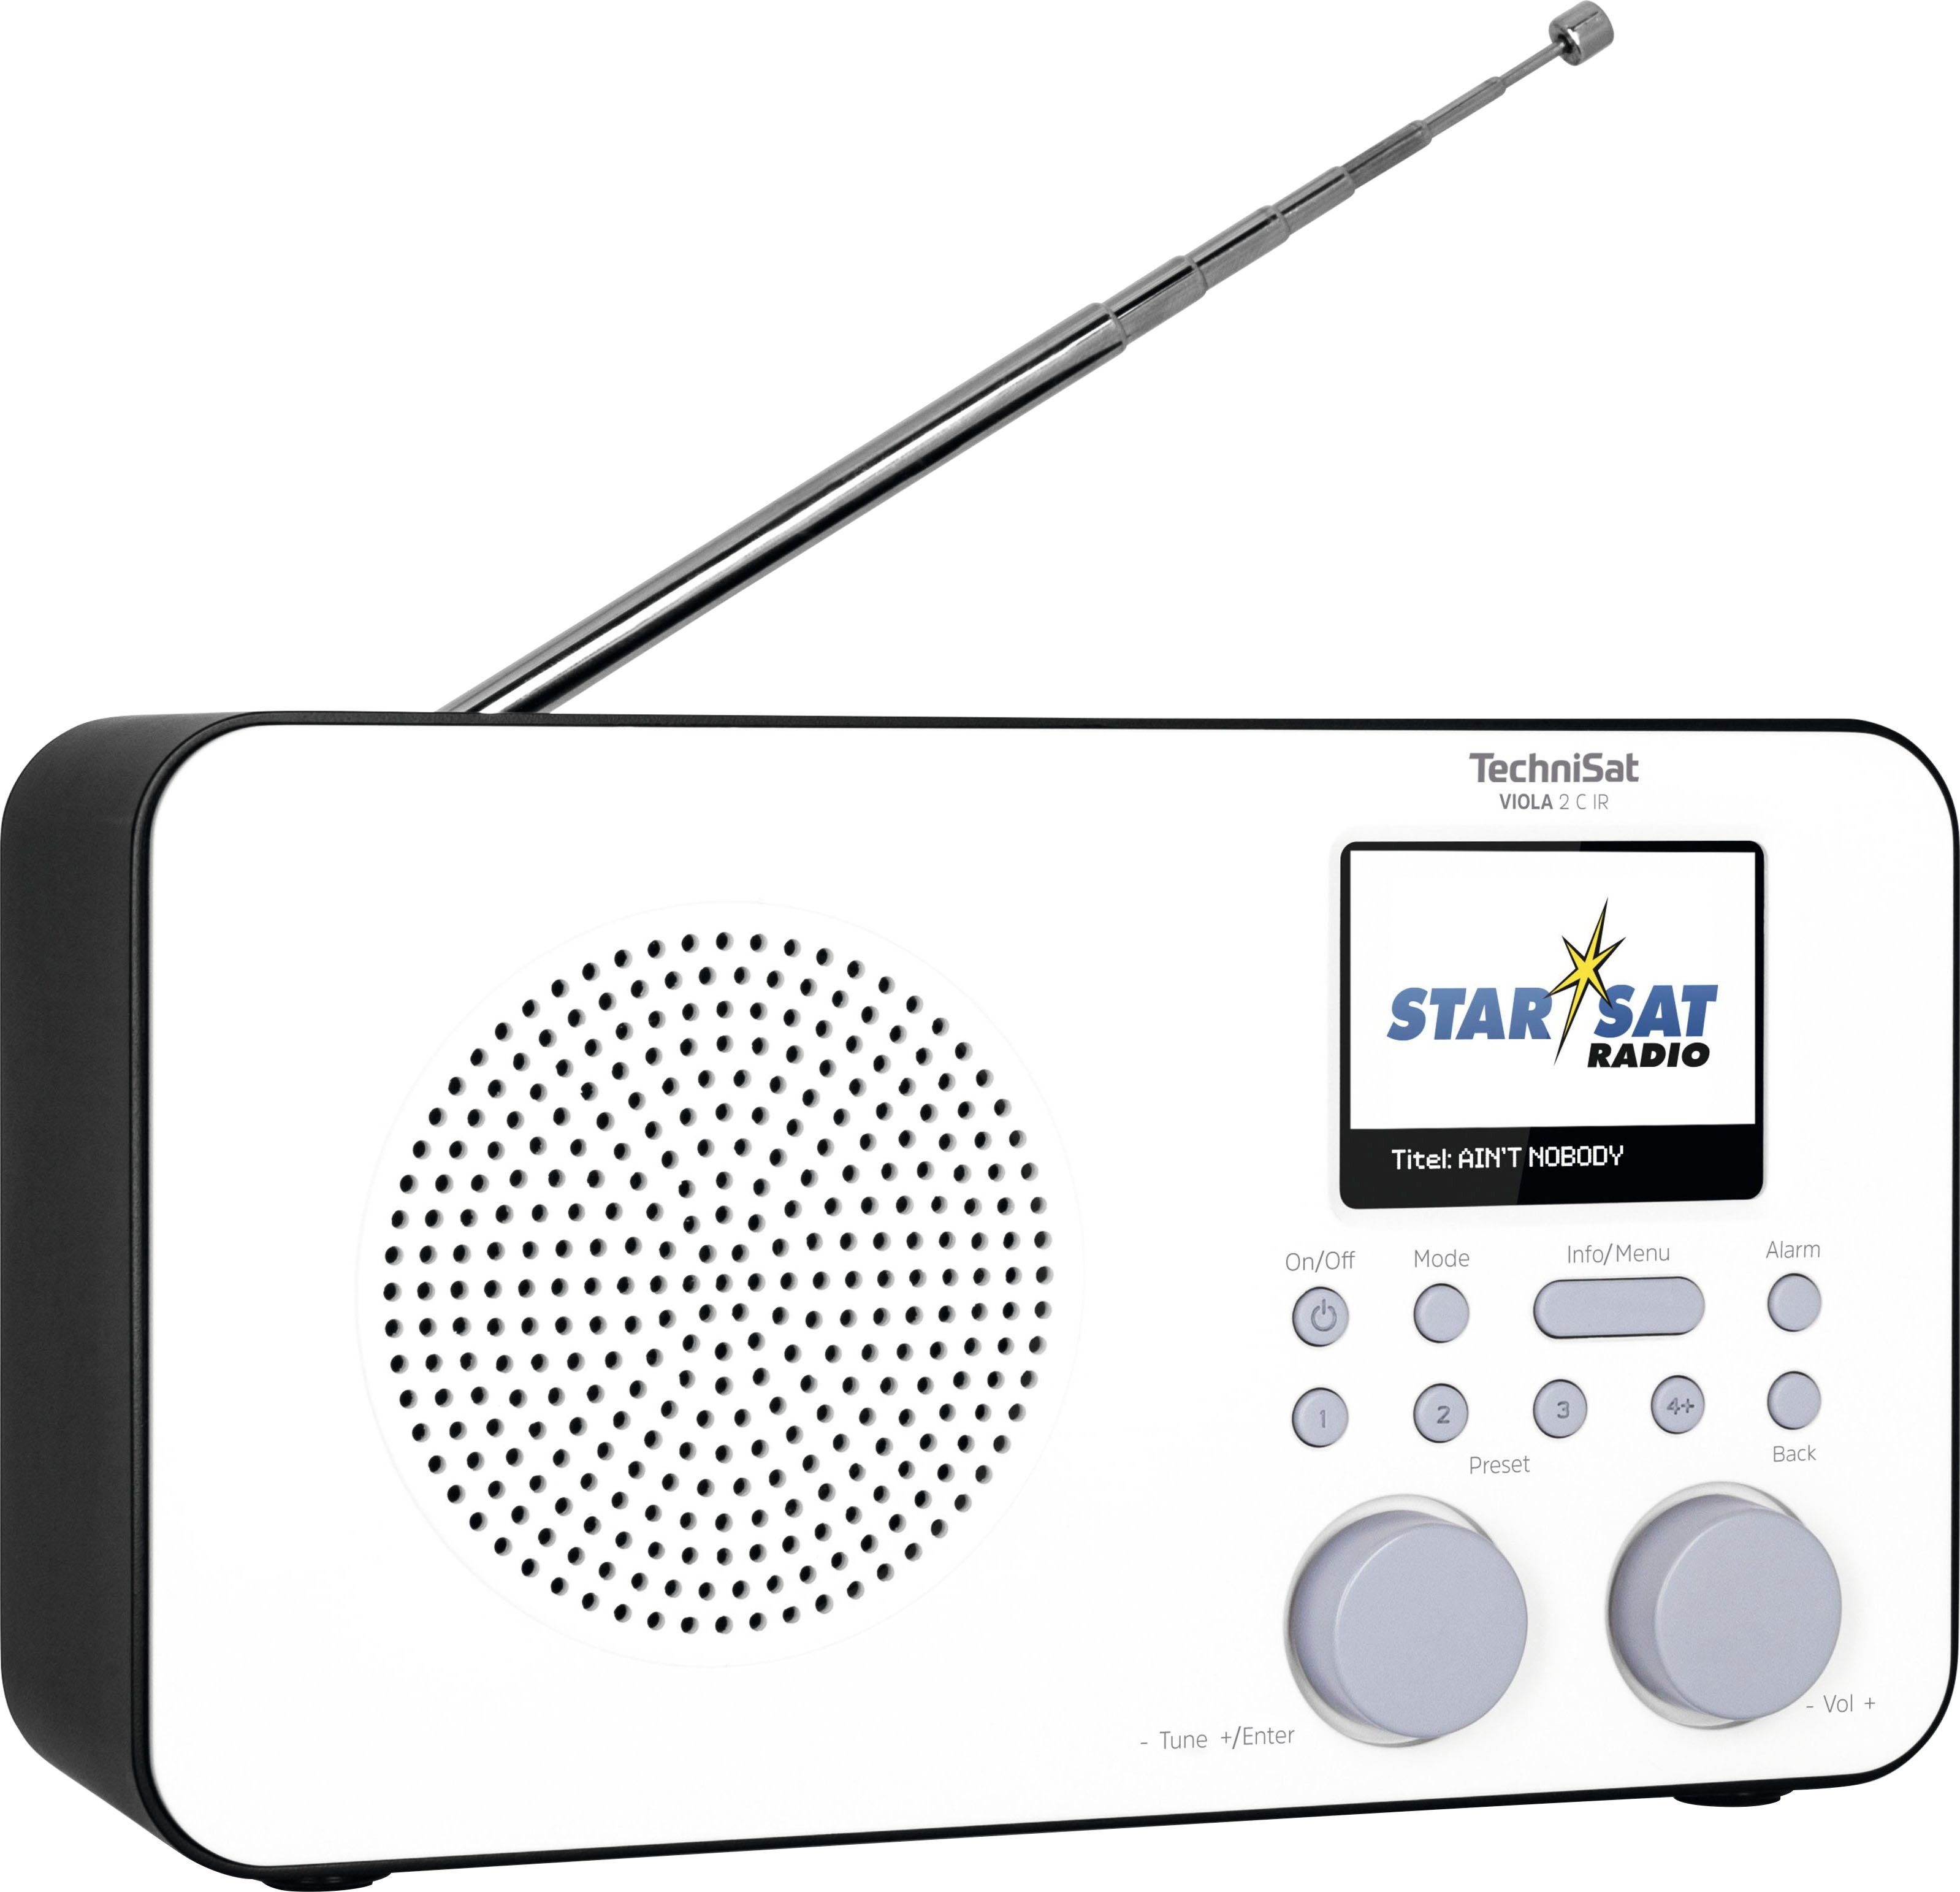 (Digitalradio Akku) Internet-Radio 2 RDS, (DAB), Tragbares Internetradio, VIOLA mit DAB+, TechniSat mit IR C Farbdisplay, UKW